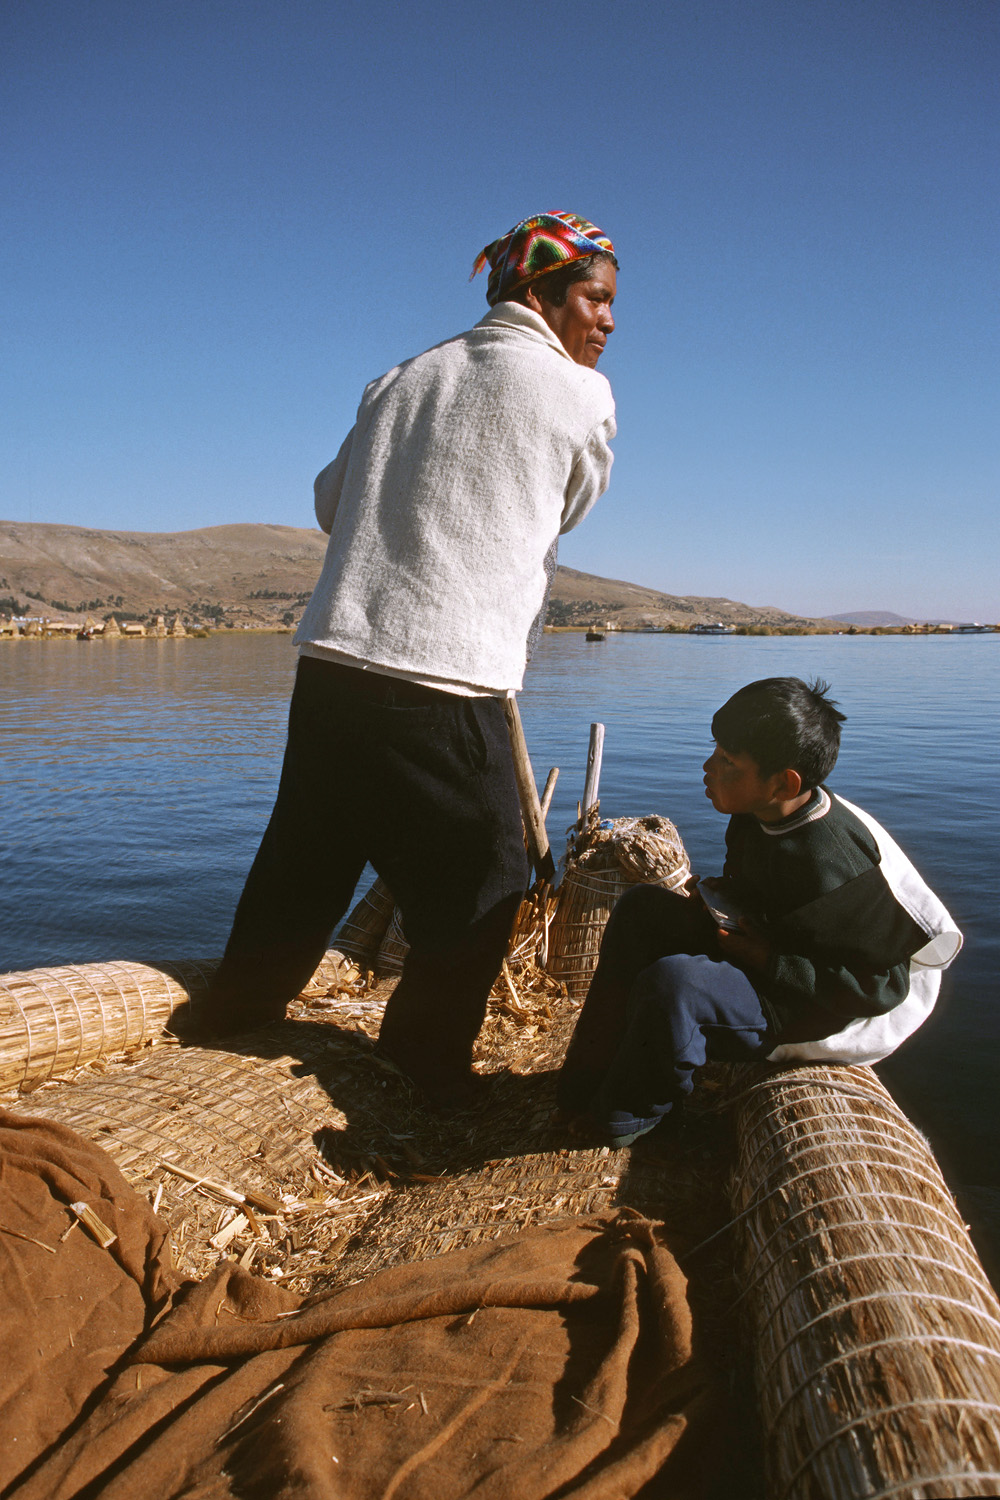 bill-hocker-pros-island-reed-boat-lake-titicaca-peru-2005